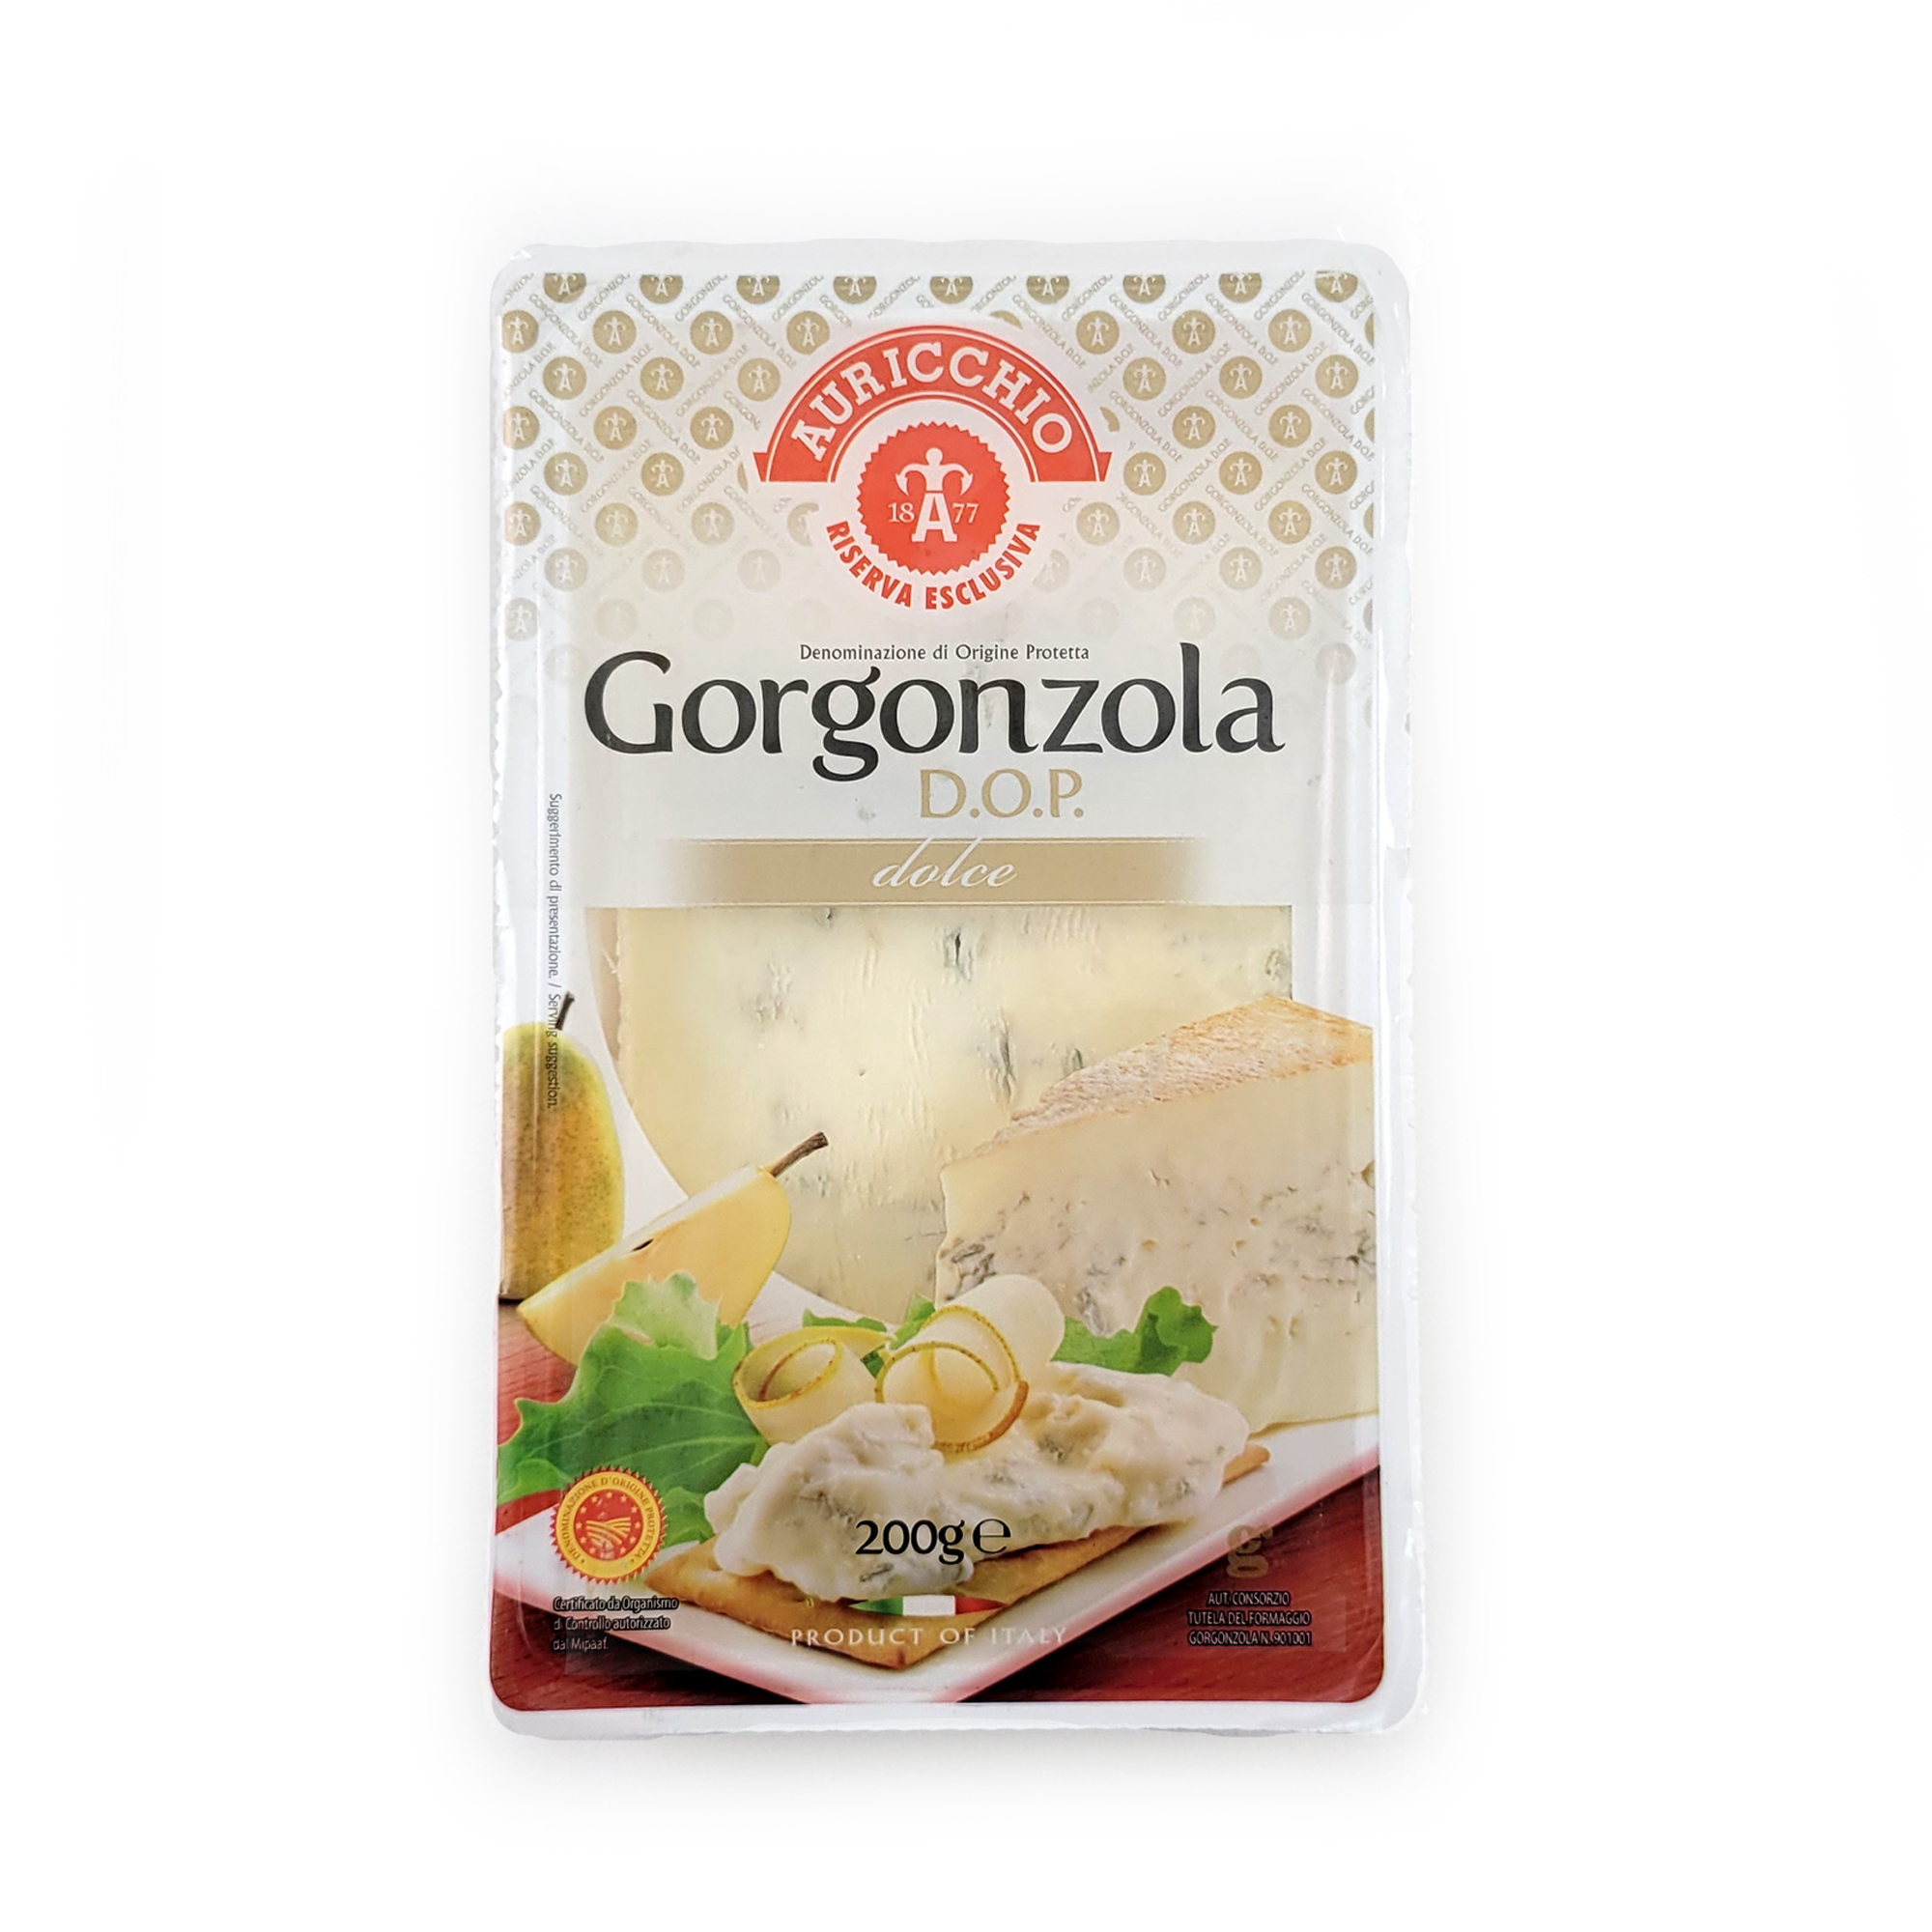 Auricchio Gorgonzola DOP Dolce Cheese 200g - Italy*